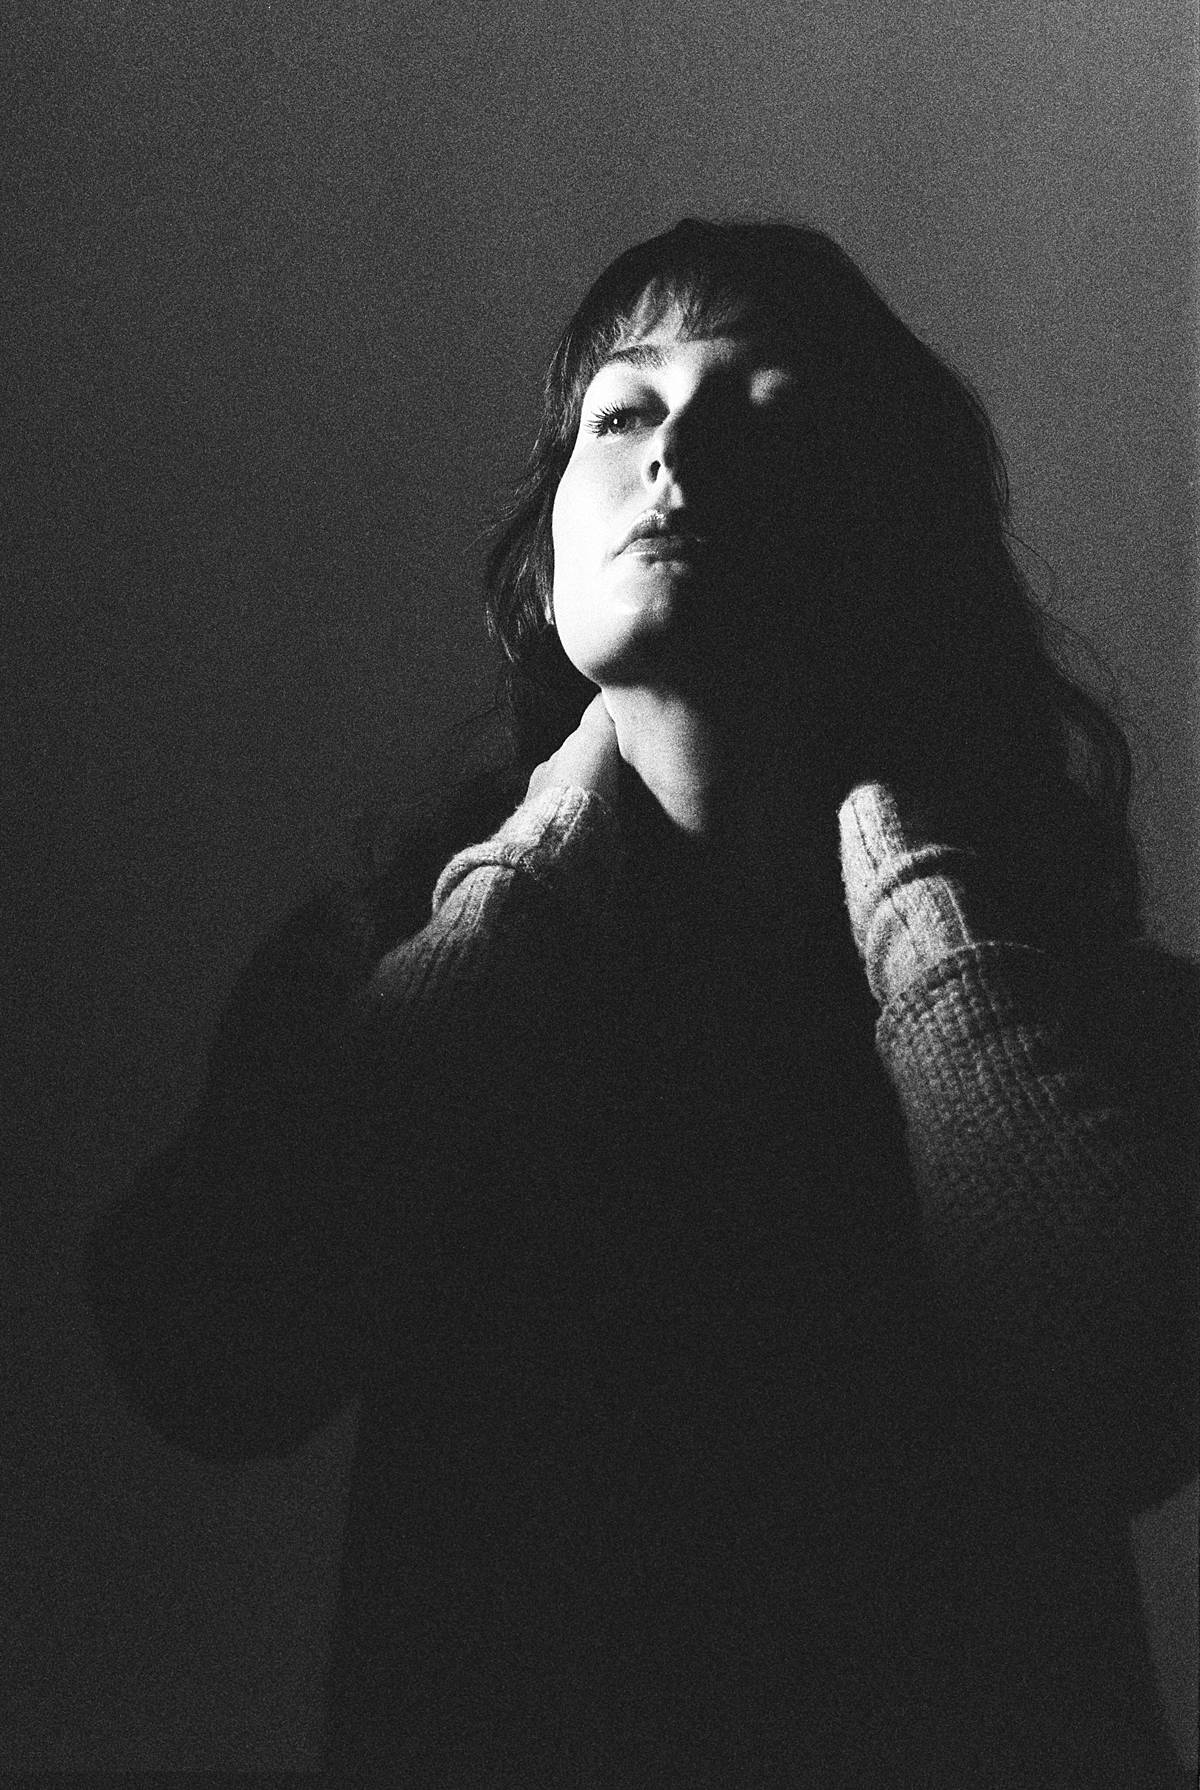 1911 charleston studio fuji acros 400 pushed film 35mm dramatic portraits black and white 00017_web